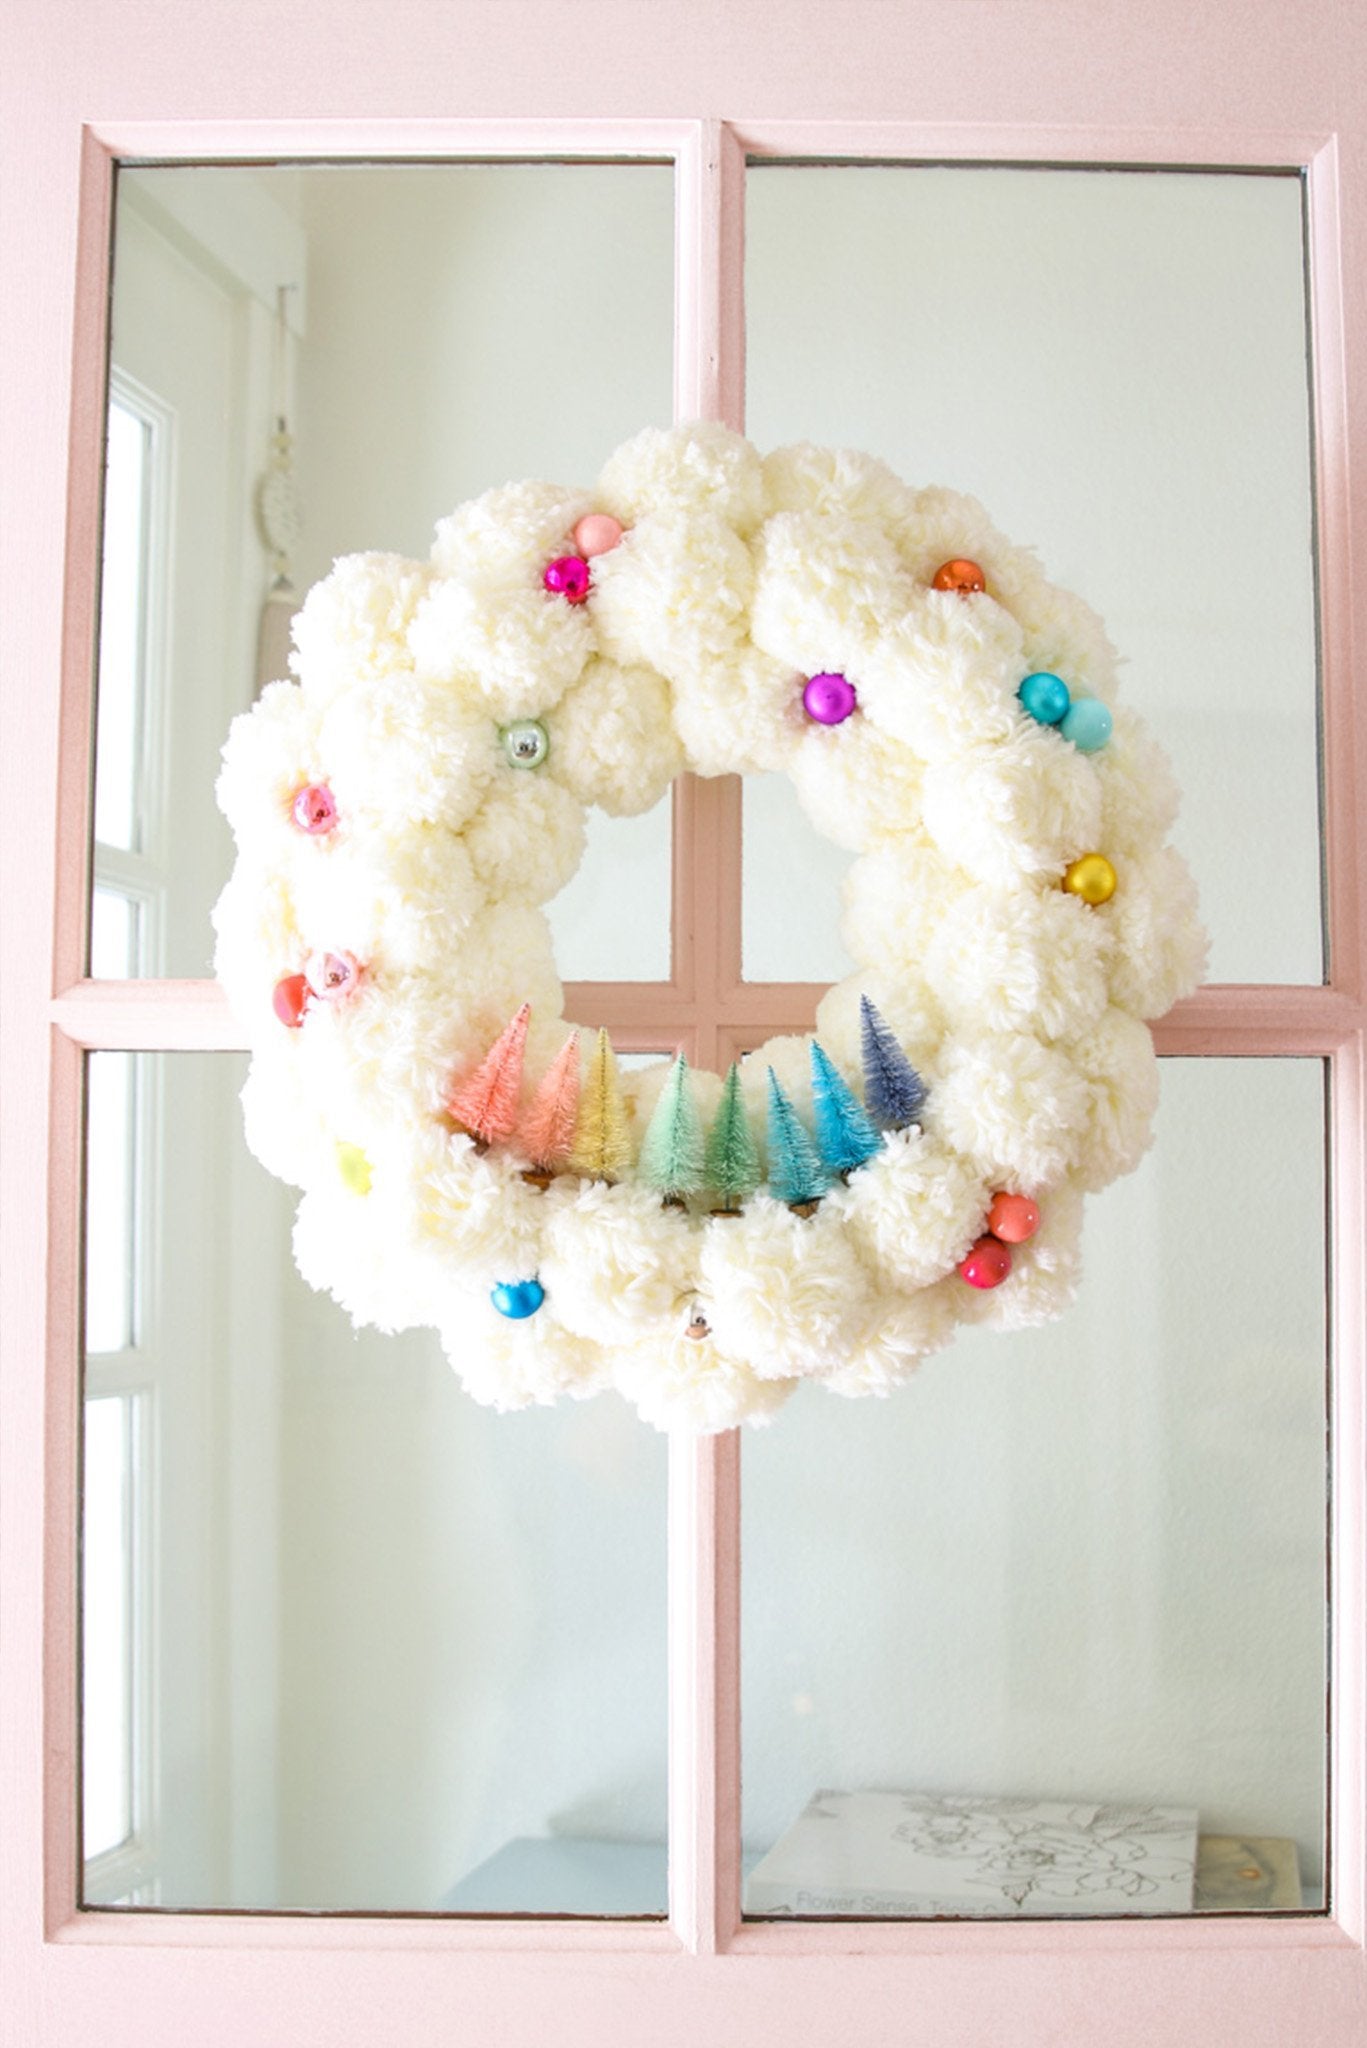 5 Festive DIY Pom Pom Wreaths to Make This Holiday Season - Pretty Collected